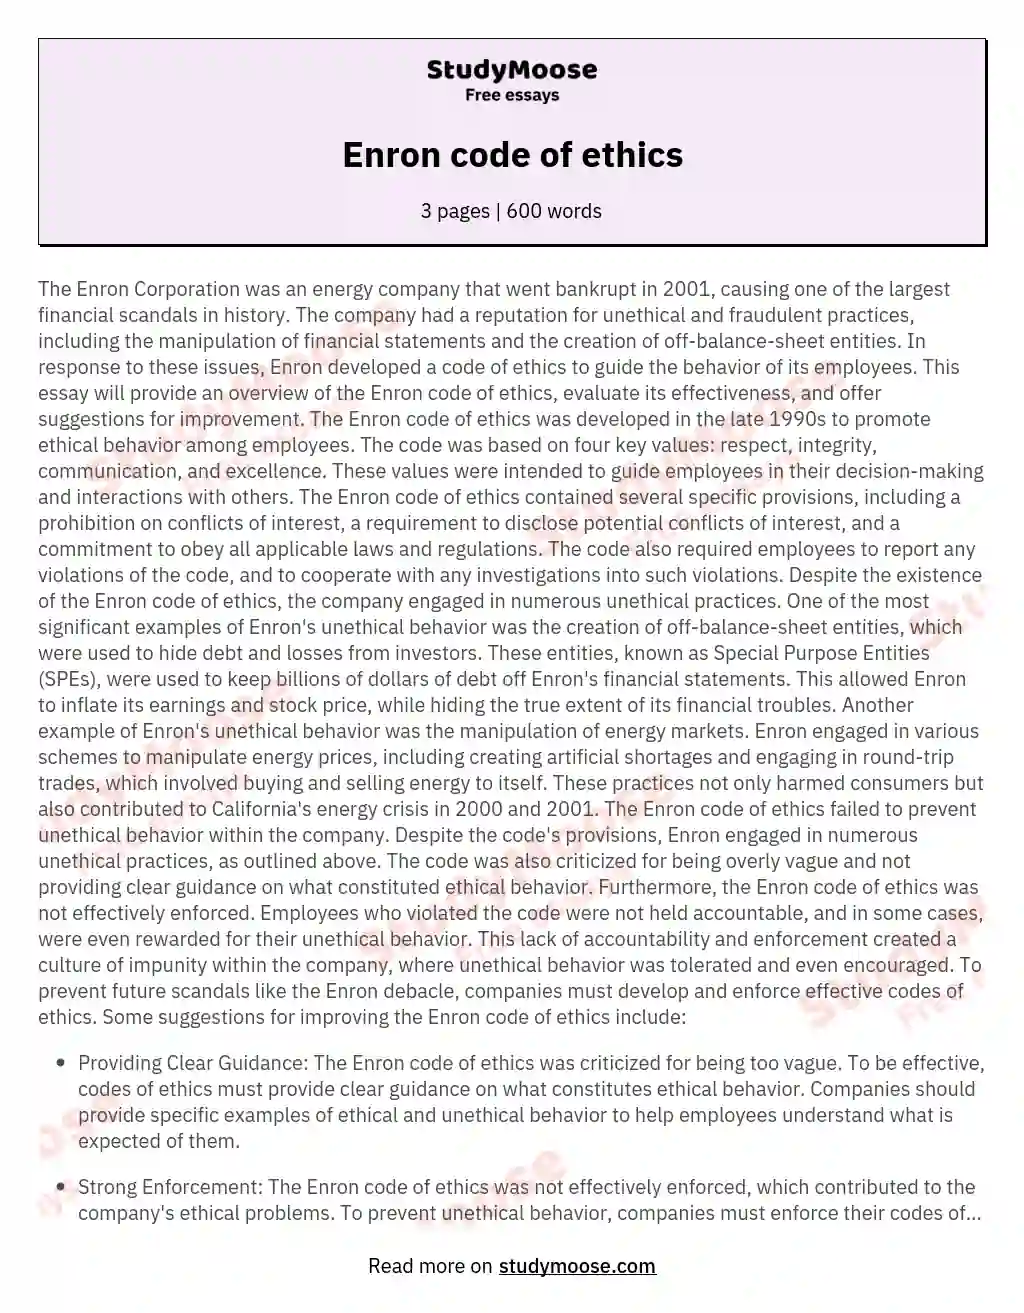 Enron code of ethics essay